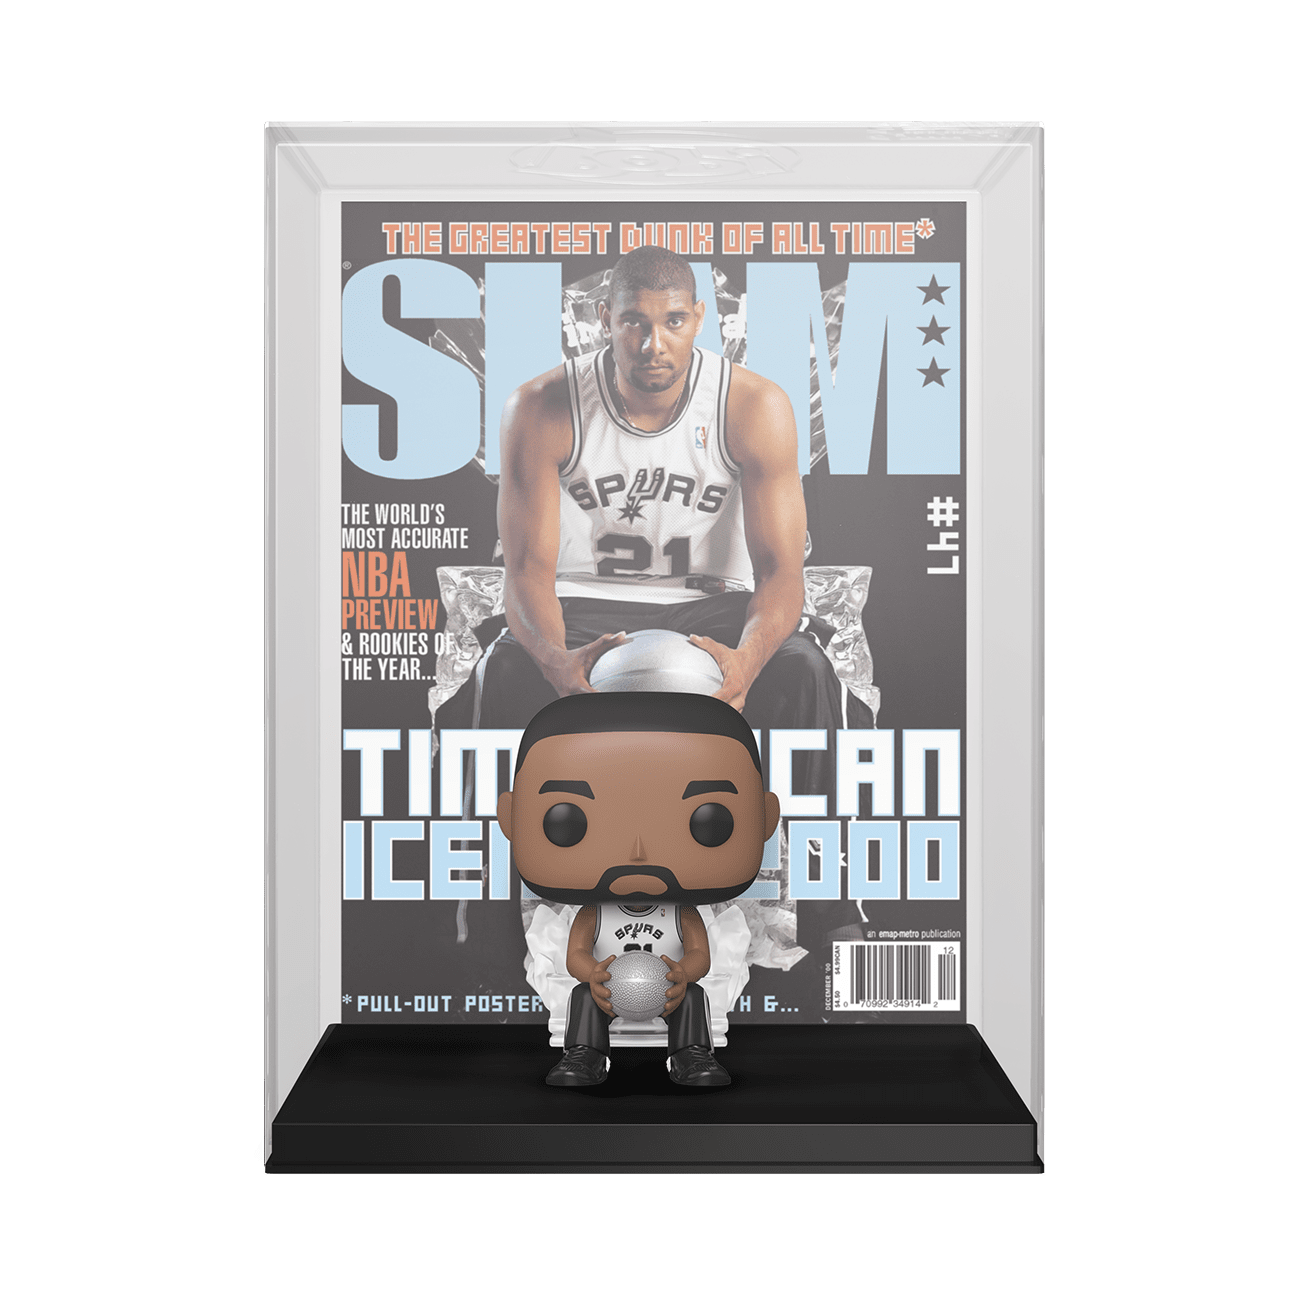 Funko Pop NBA Magazine Cover Tim Duncan 05 Slam